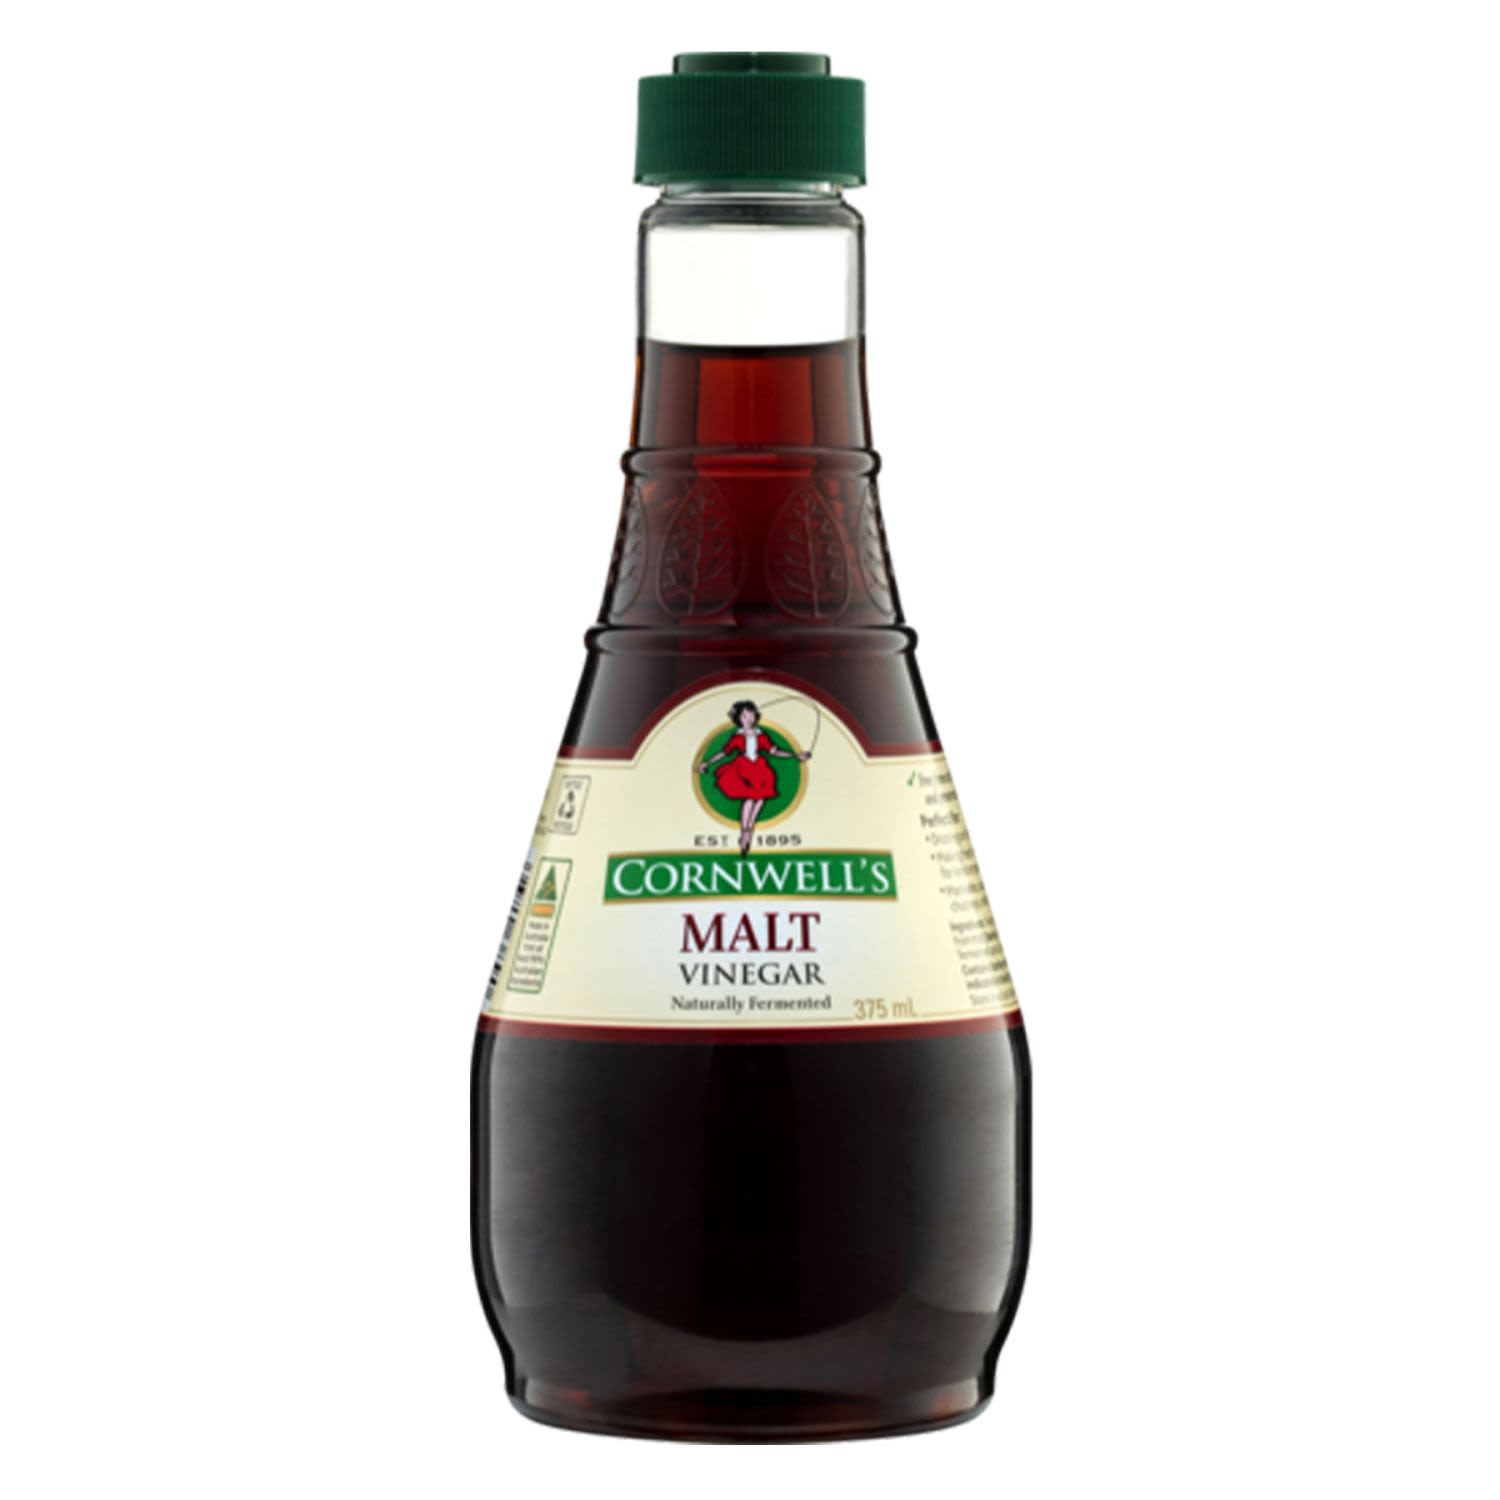 Cornwells Malt Vinegar 375ml